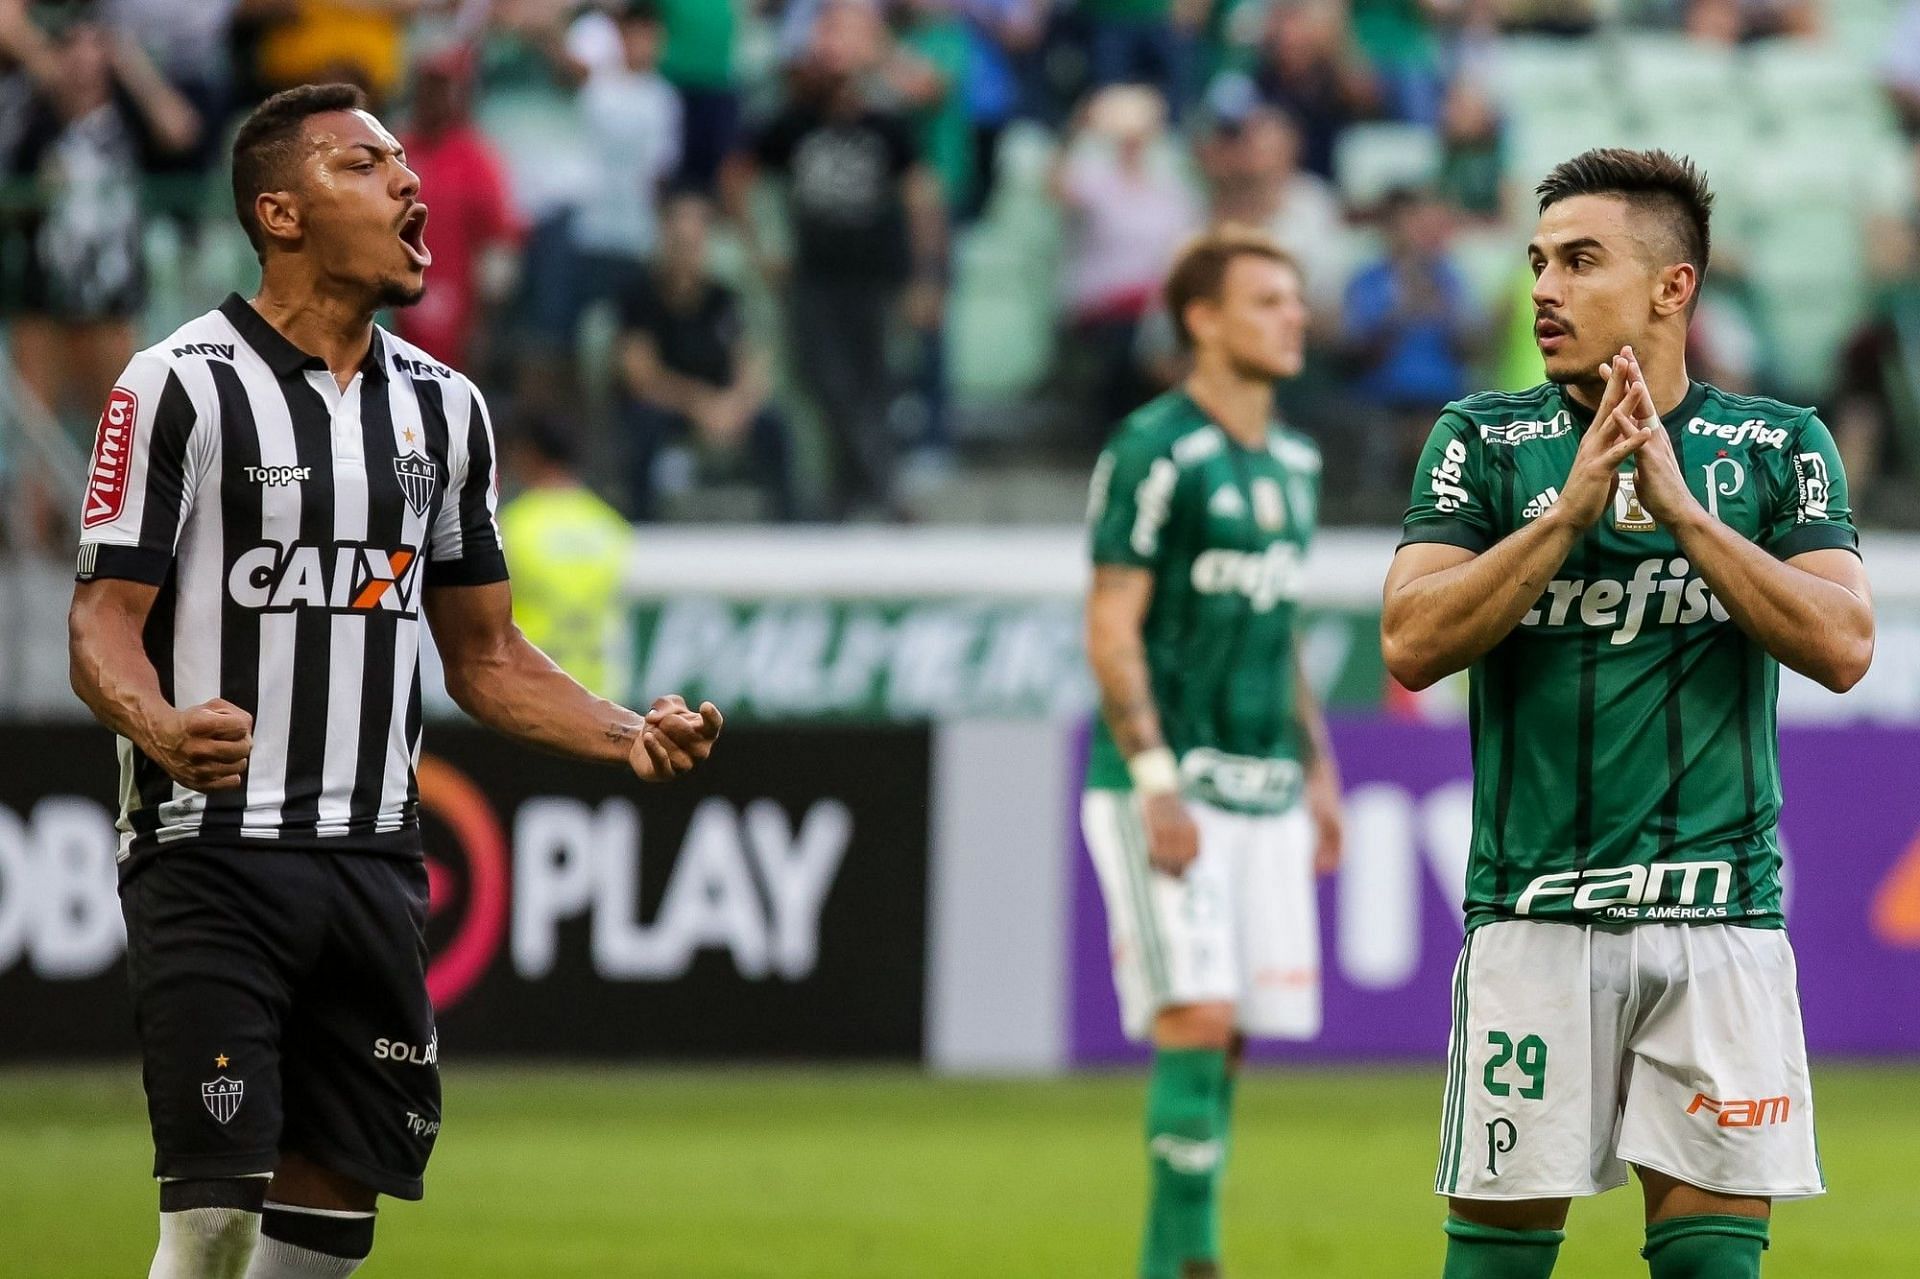 Palmeiras face Atletico Mineiro in a top-of-the-table clash on Sunday